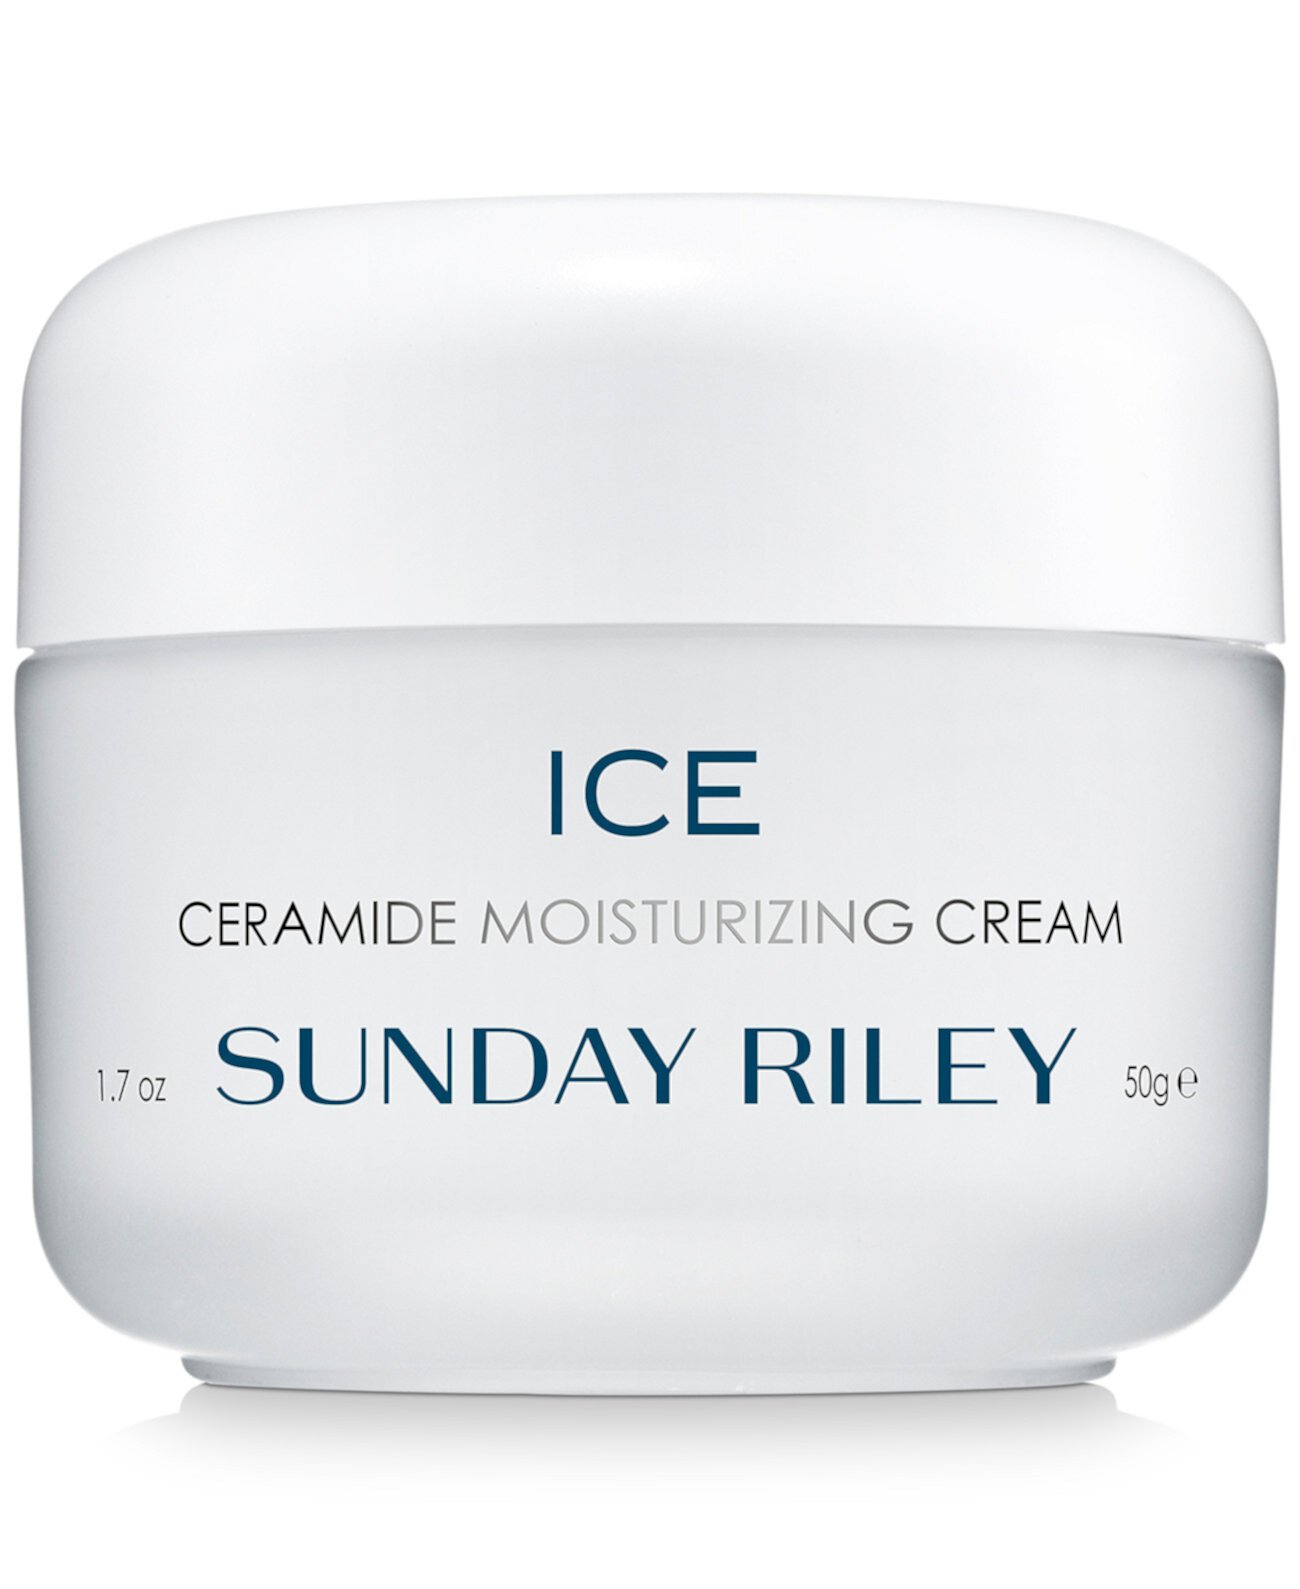 Увлажняющий крем ICE Ceramide, 1,7 унции. Sunday Riley